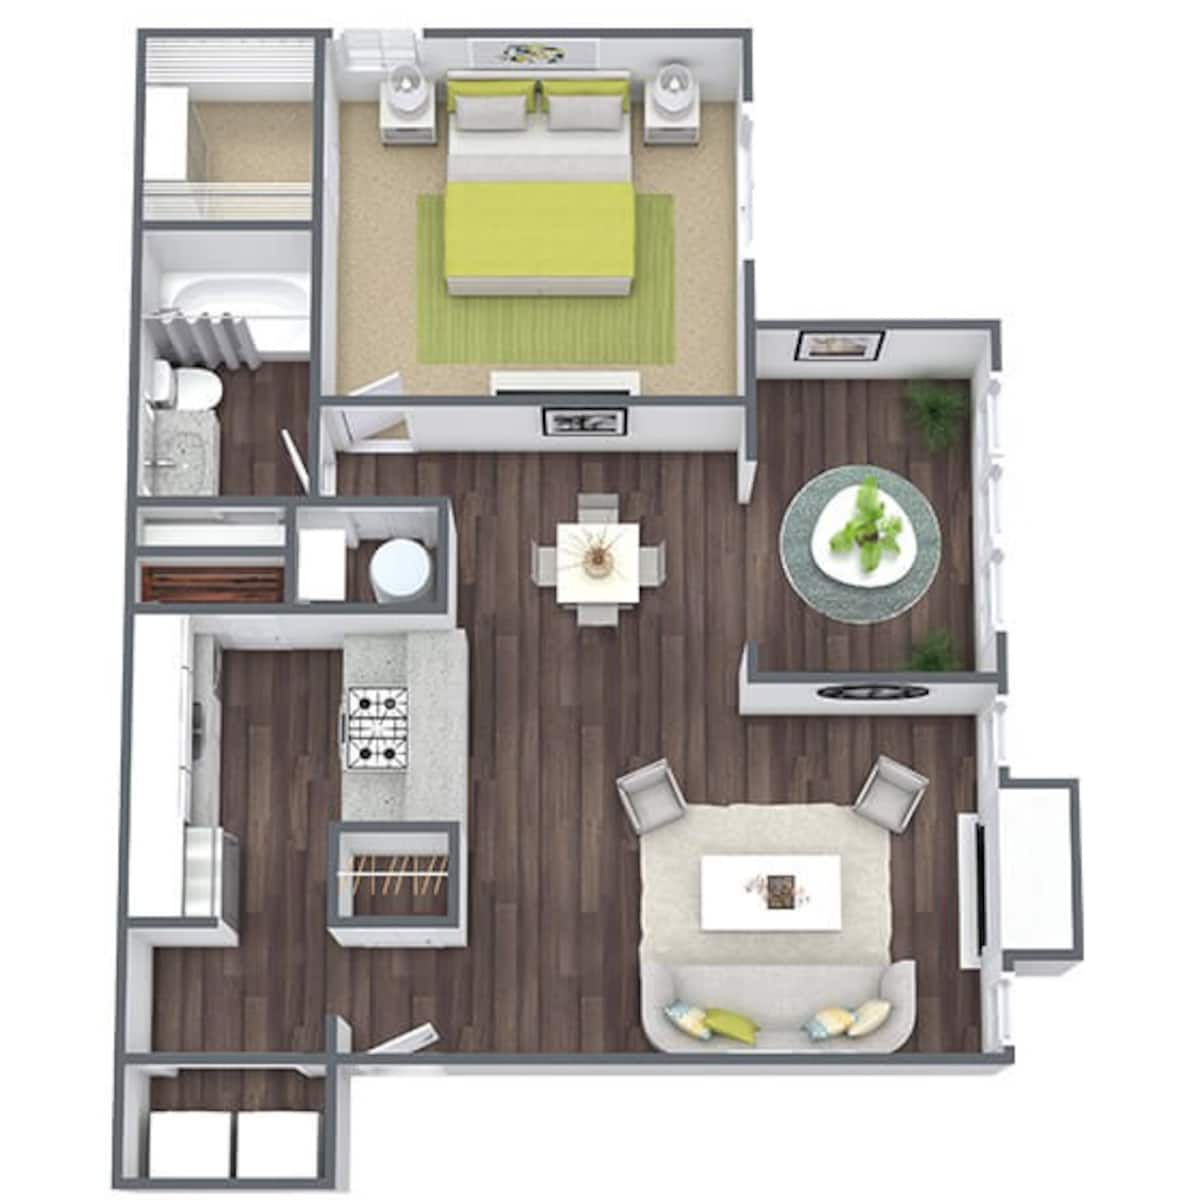 Floorplan diagram for A4 | Evergreen, showing 1 bedroom